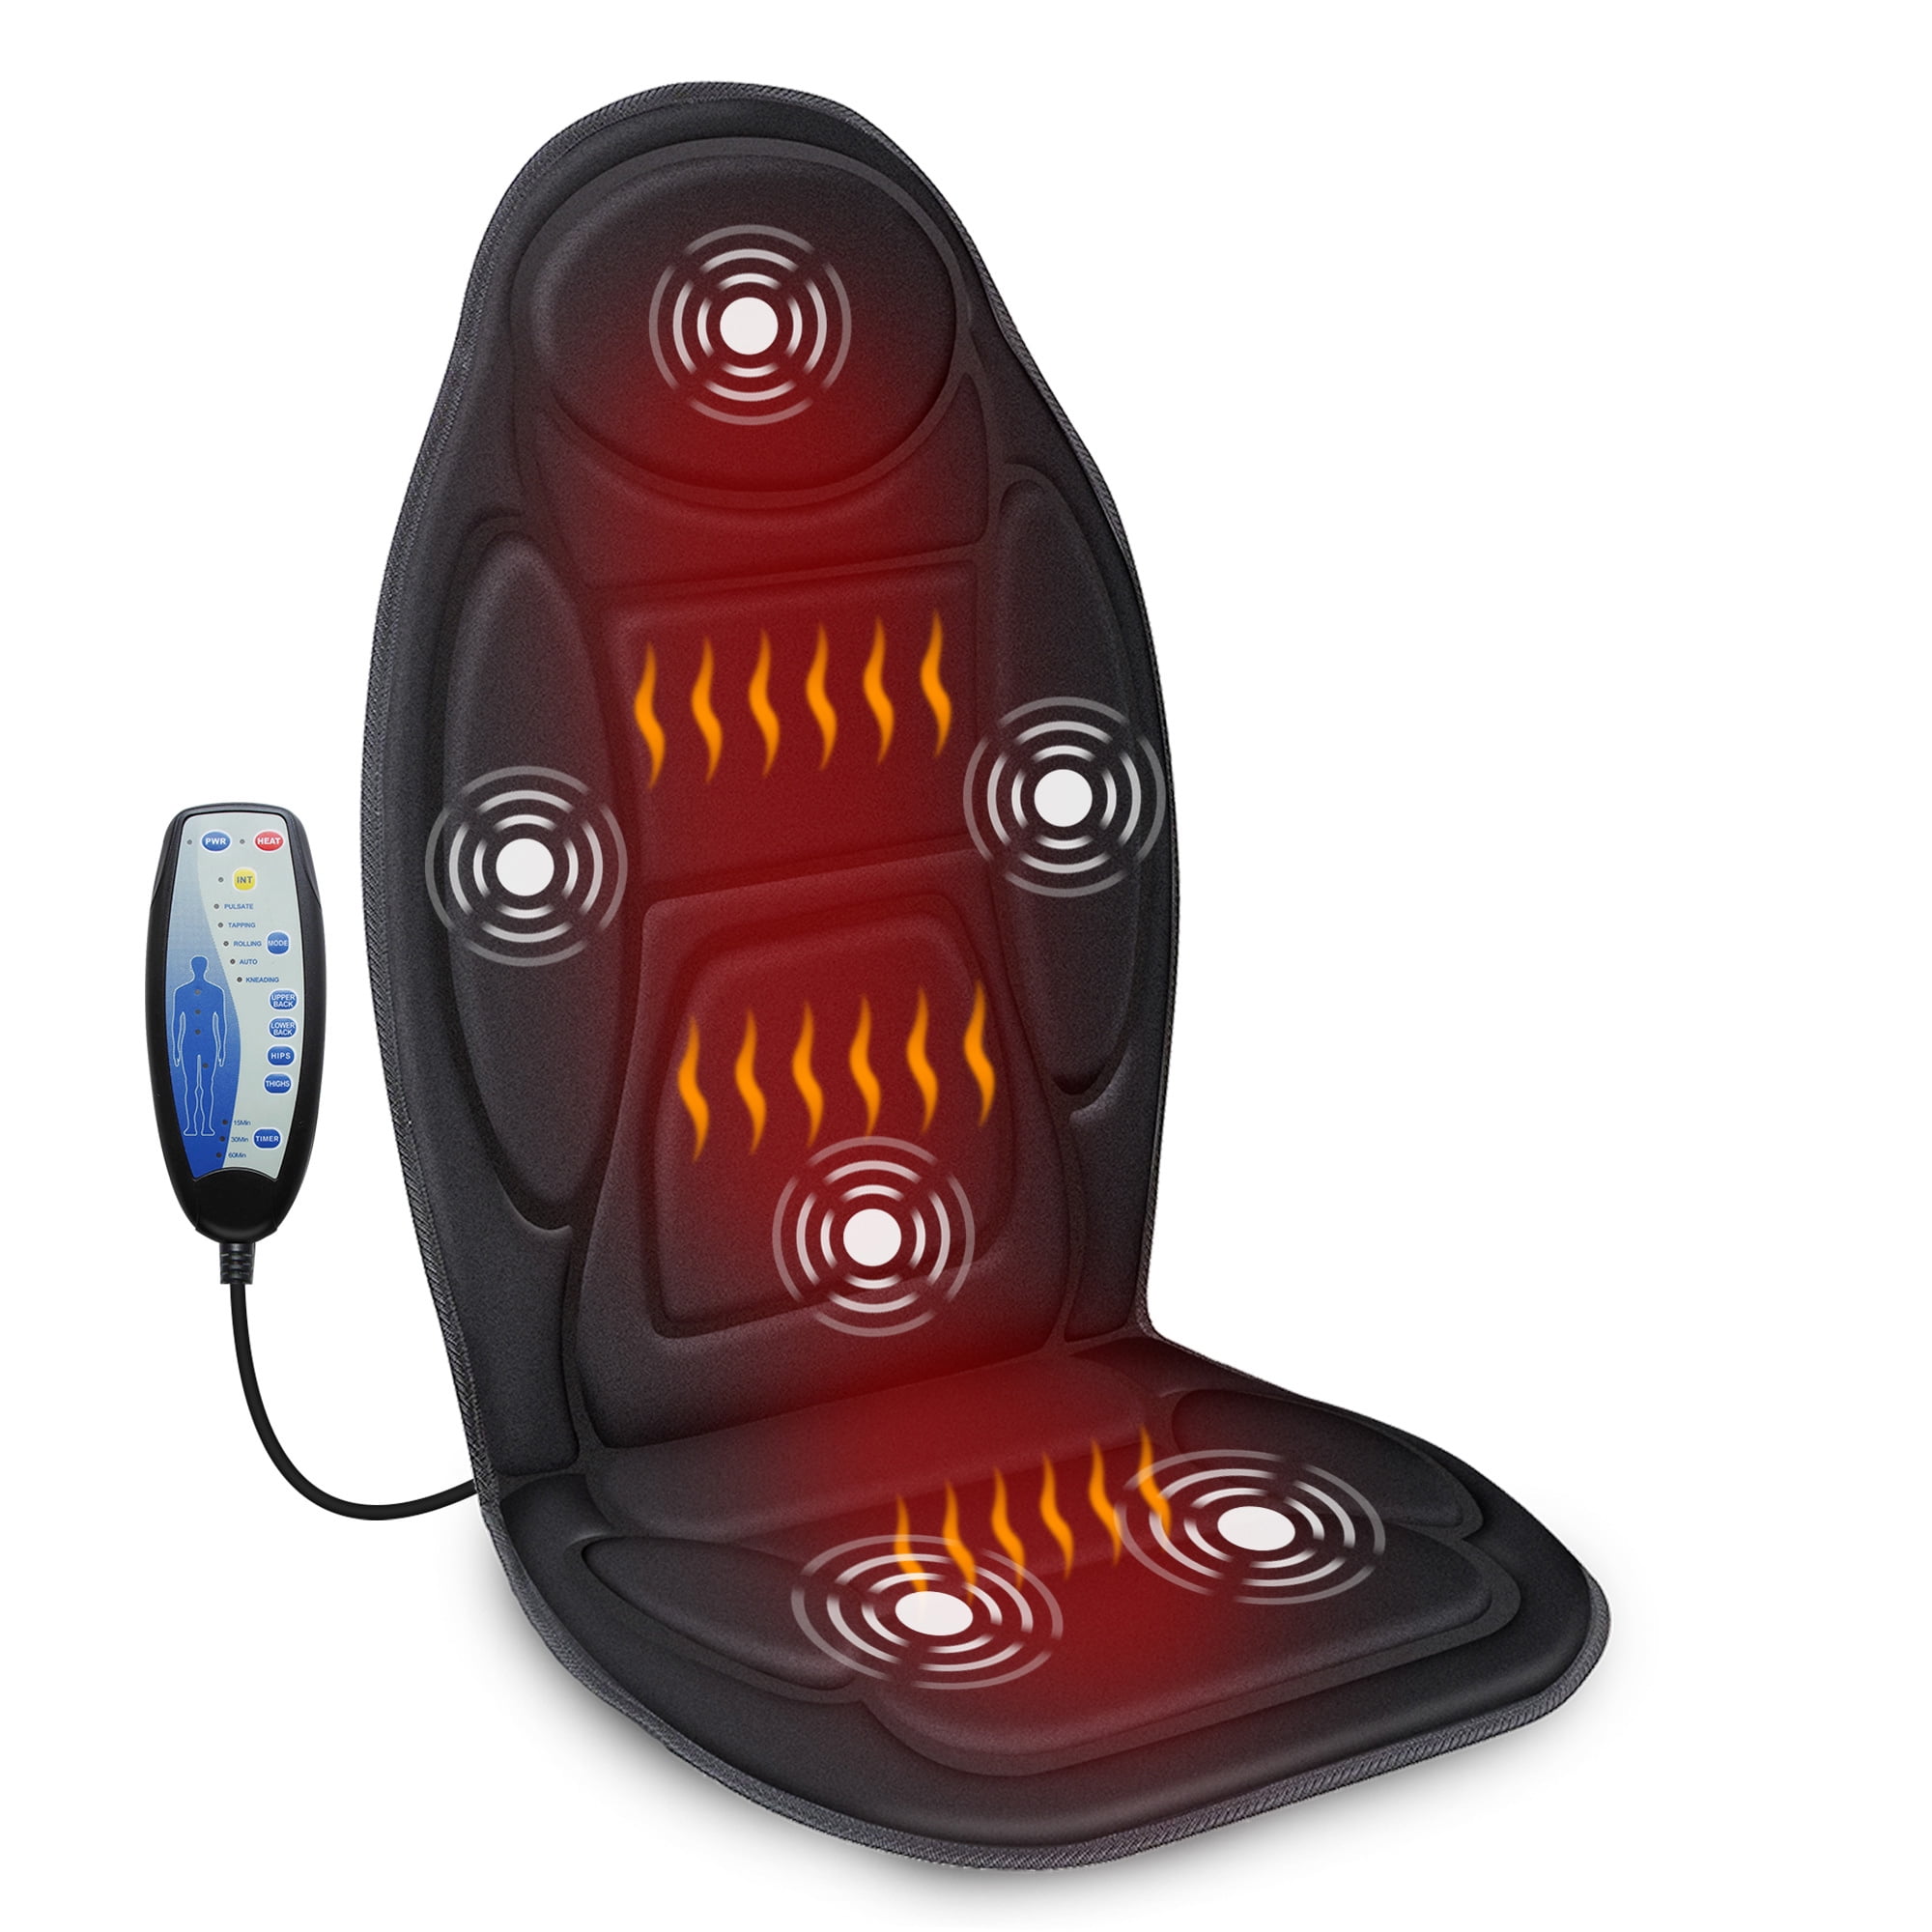 Snailax Massage Seat Cushion - Back Massager with Heat, 6